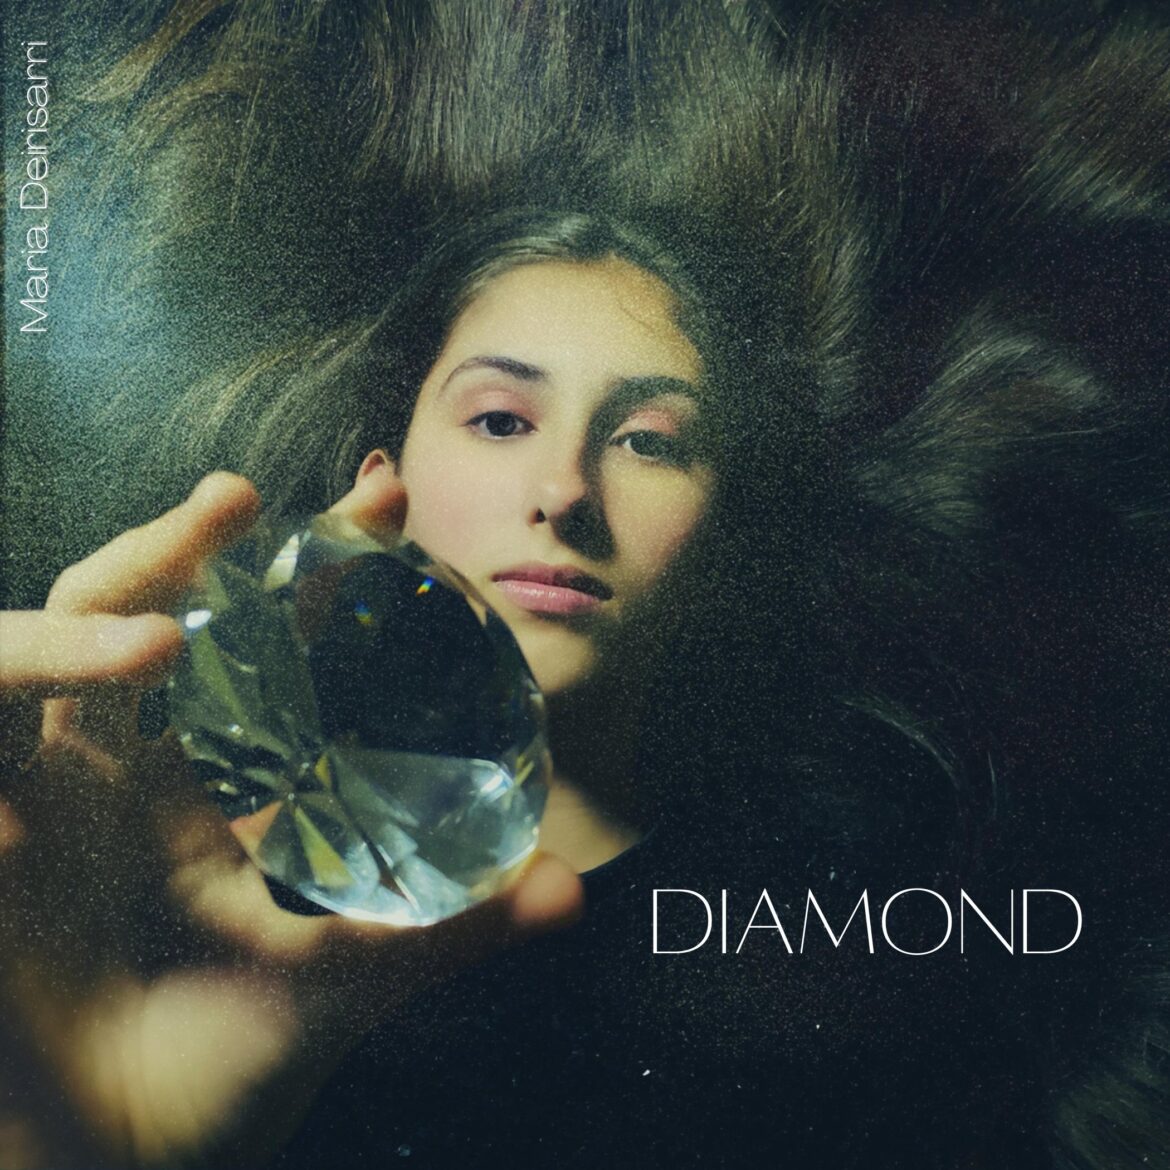 Maria Deirisarri’s “Diamond” Cuts Deep Into One’s Heart and Soul